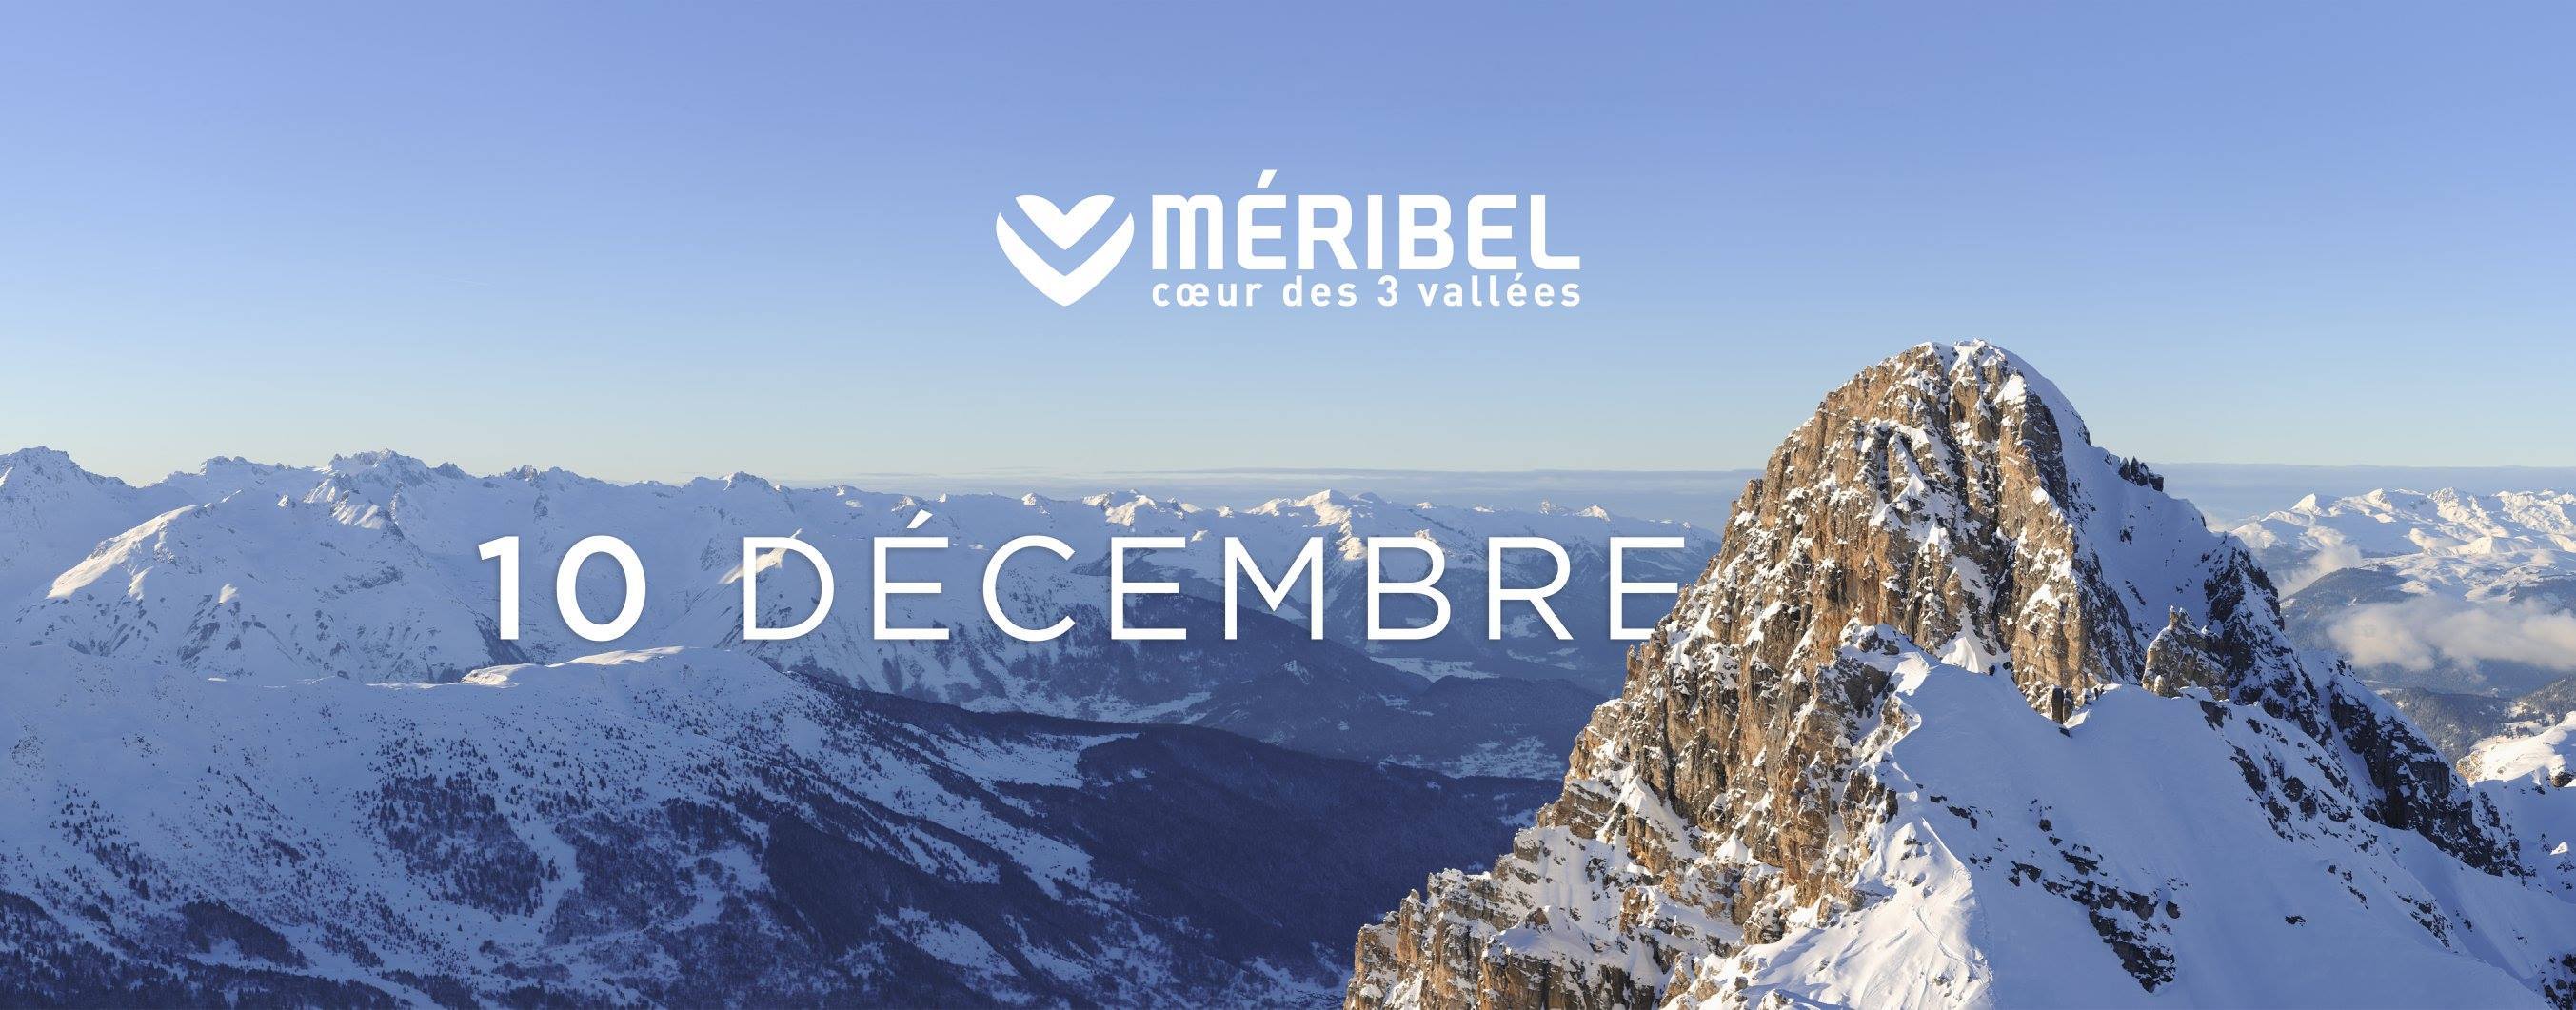 meribel-10-decembre